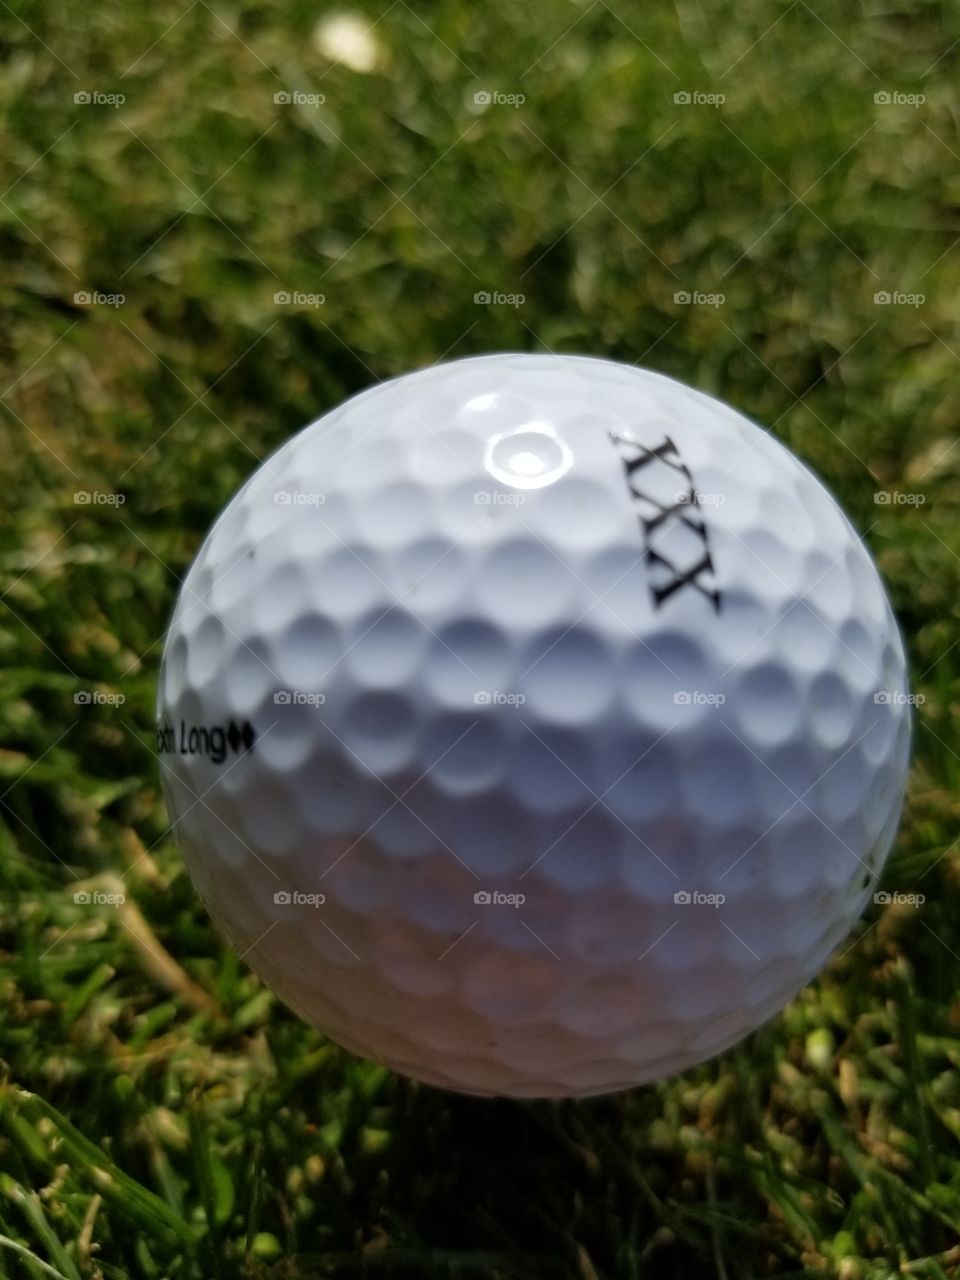 XXX
golf ball
FORE